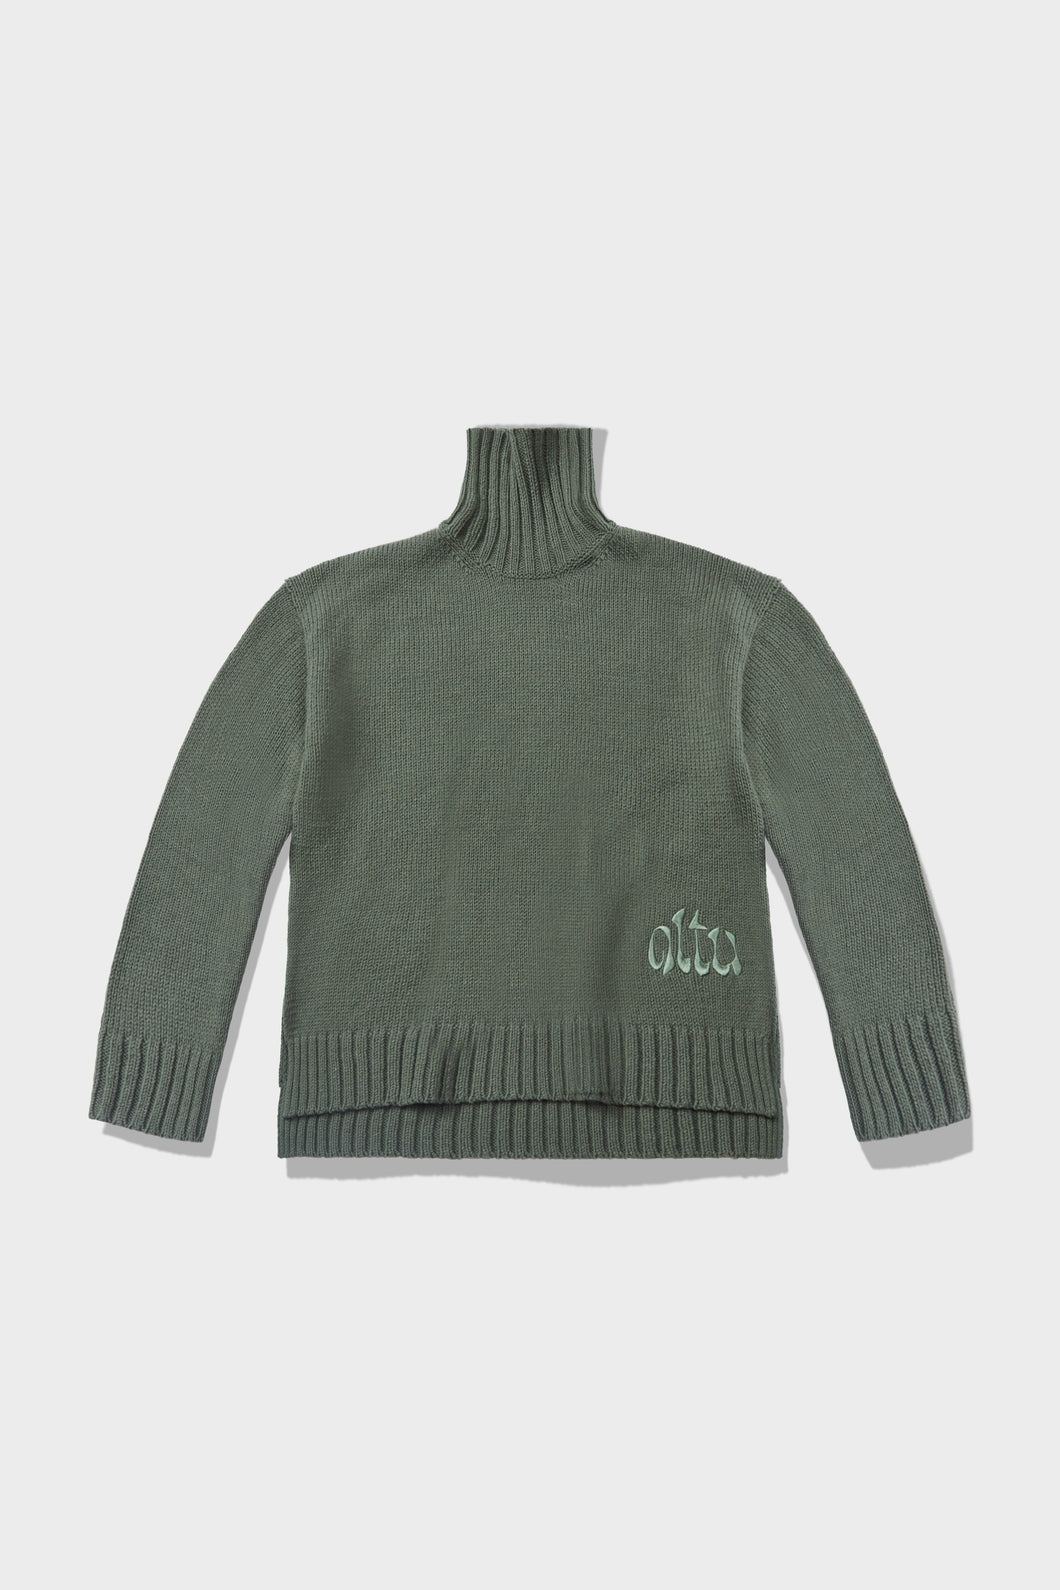 Altuzarra_Embroidered Logo Sweater-Matcha